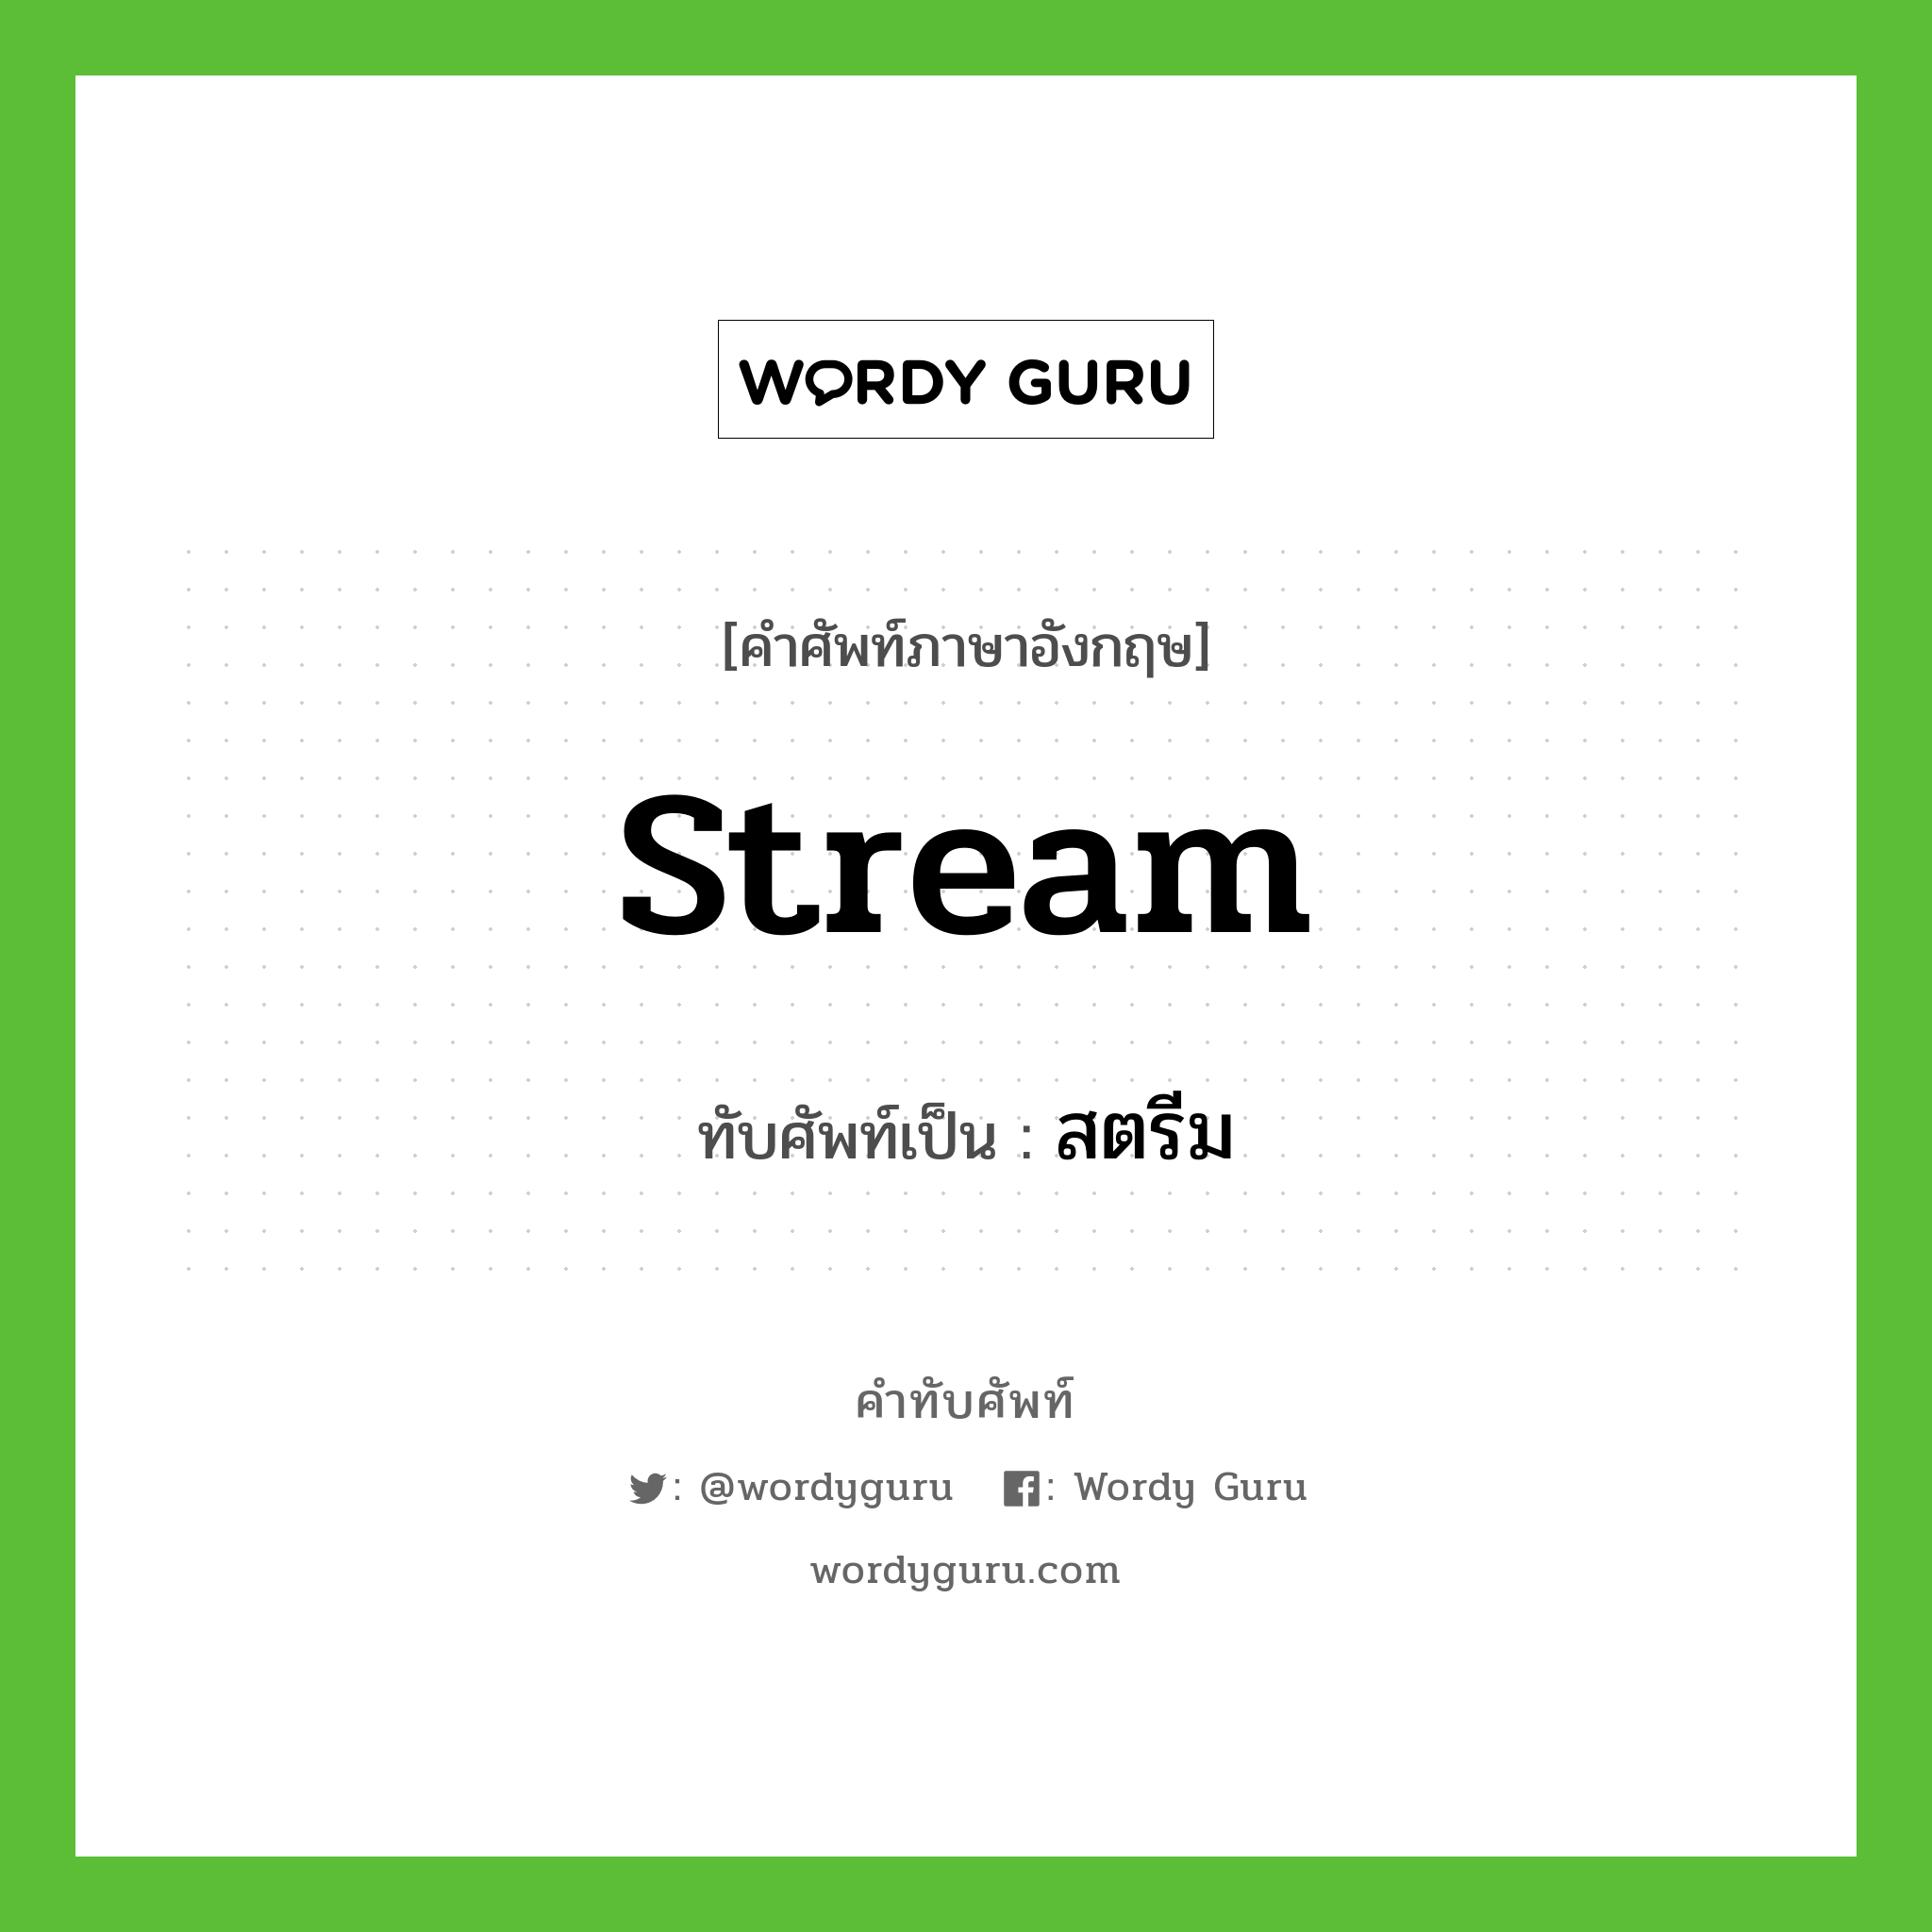 stream เขียนเป็นคำไทยว่าอะไร?, คำศัพท์ภาษาอังกฤษ stream ทับศัพท์เป็น สตรีม